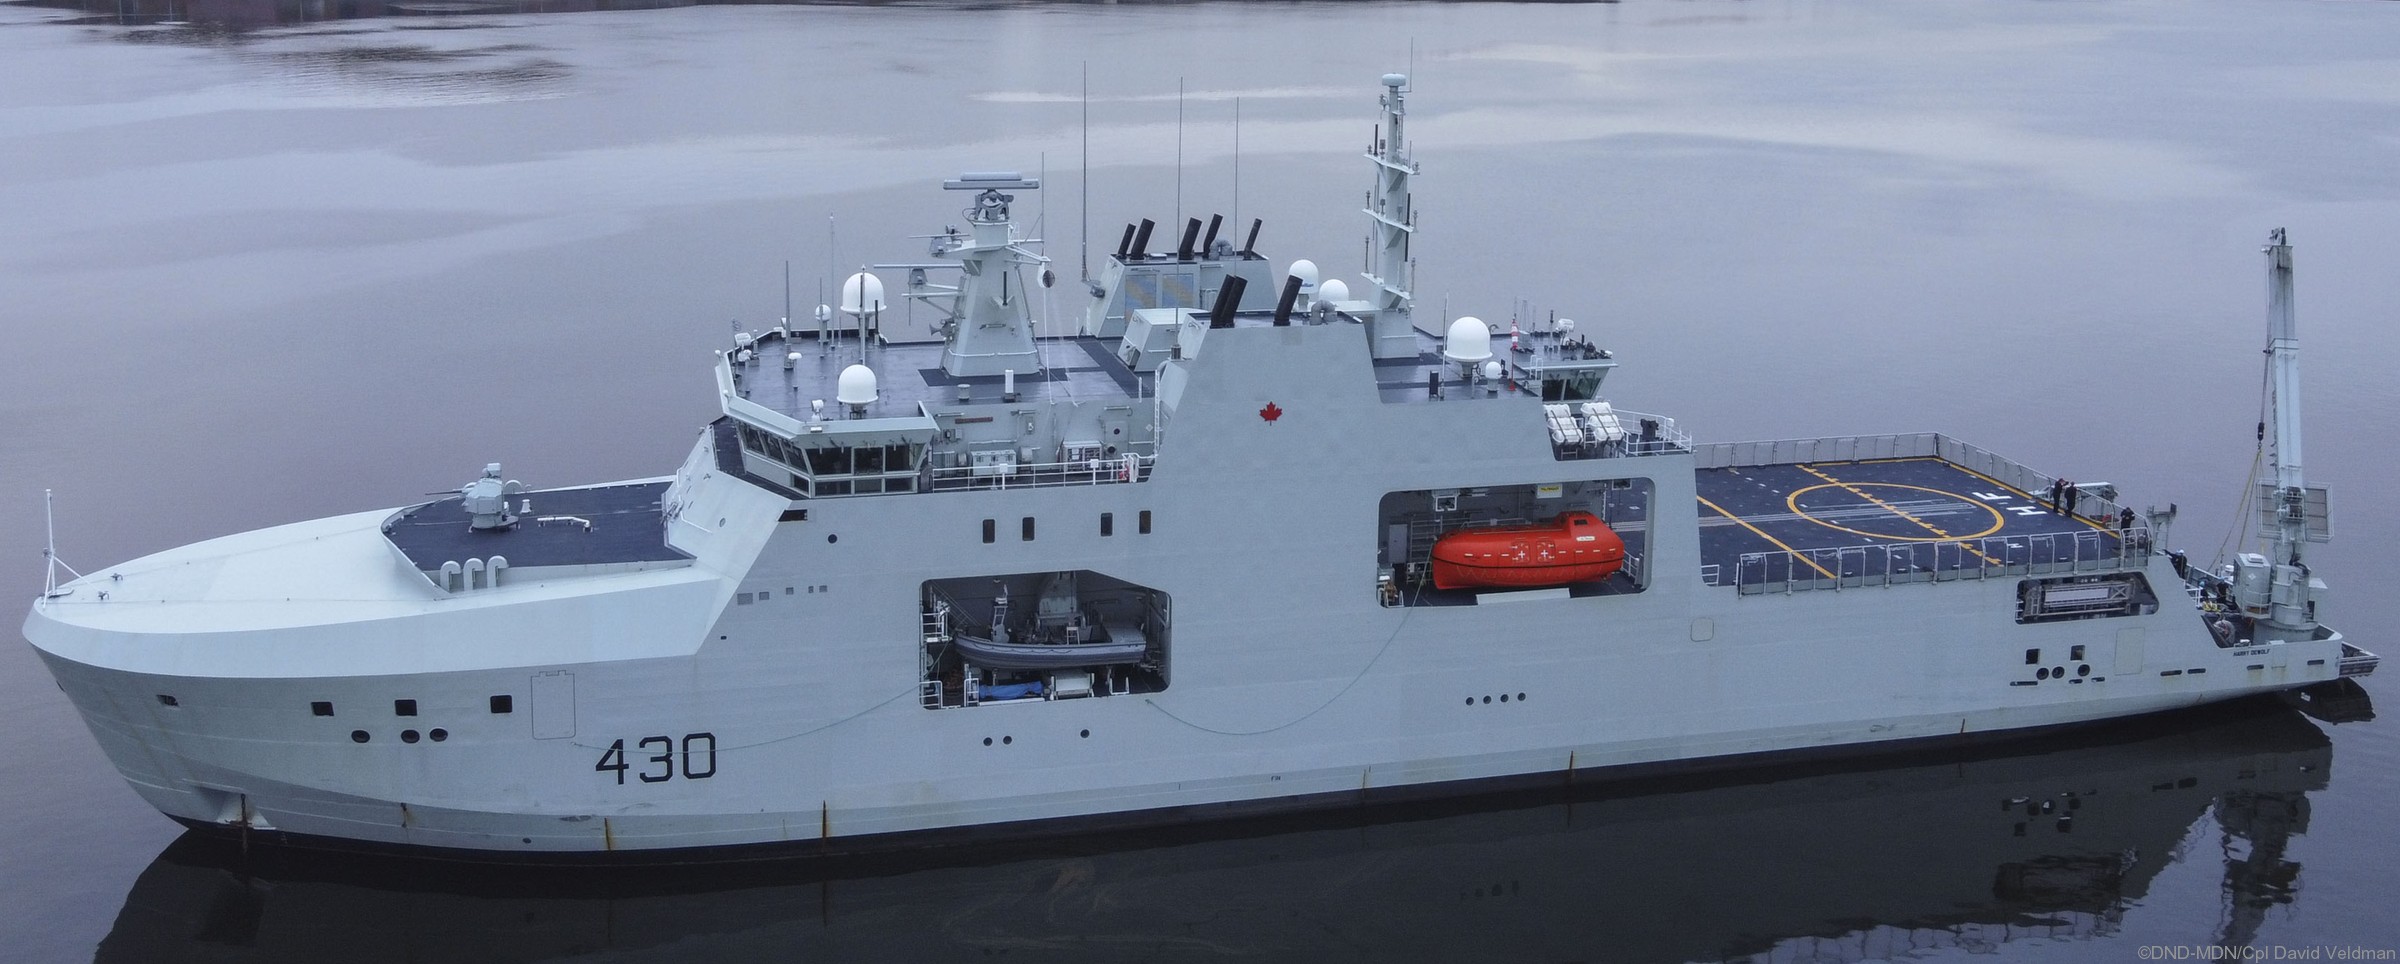 aopv-430 hmcs harry dewolf arctic offshore patrol vessel ncsm royal canadian navy 18